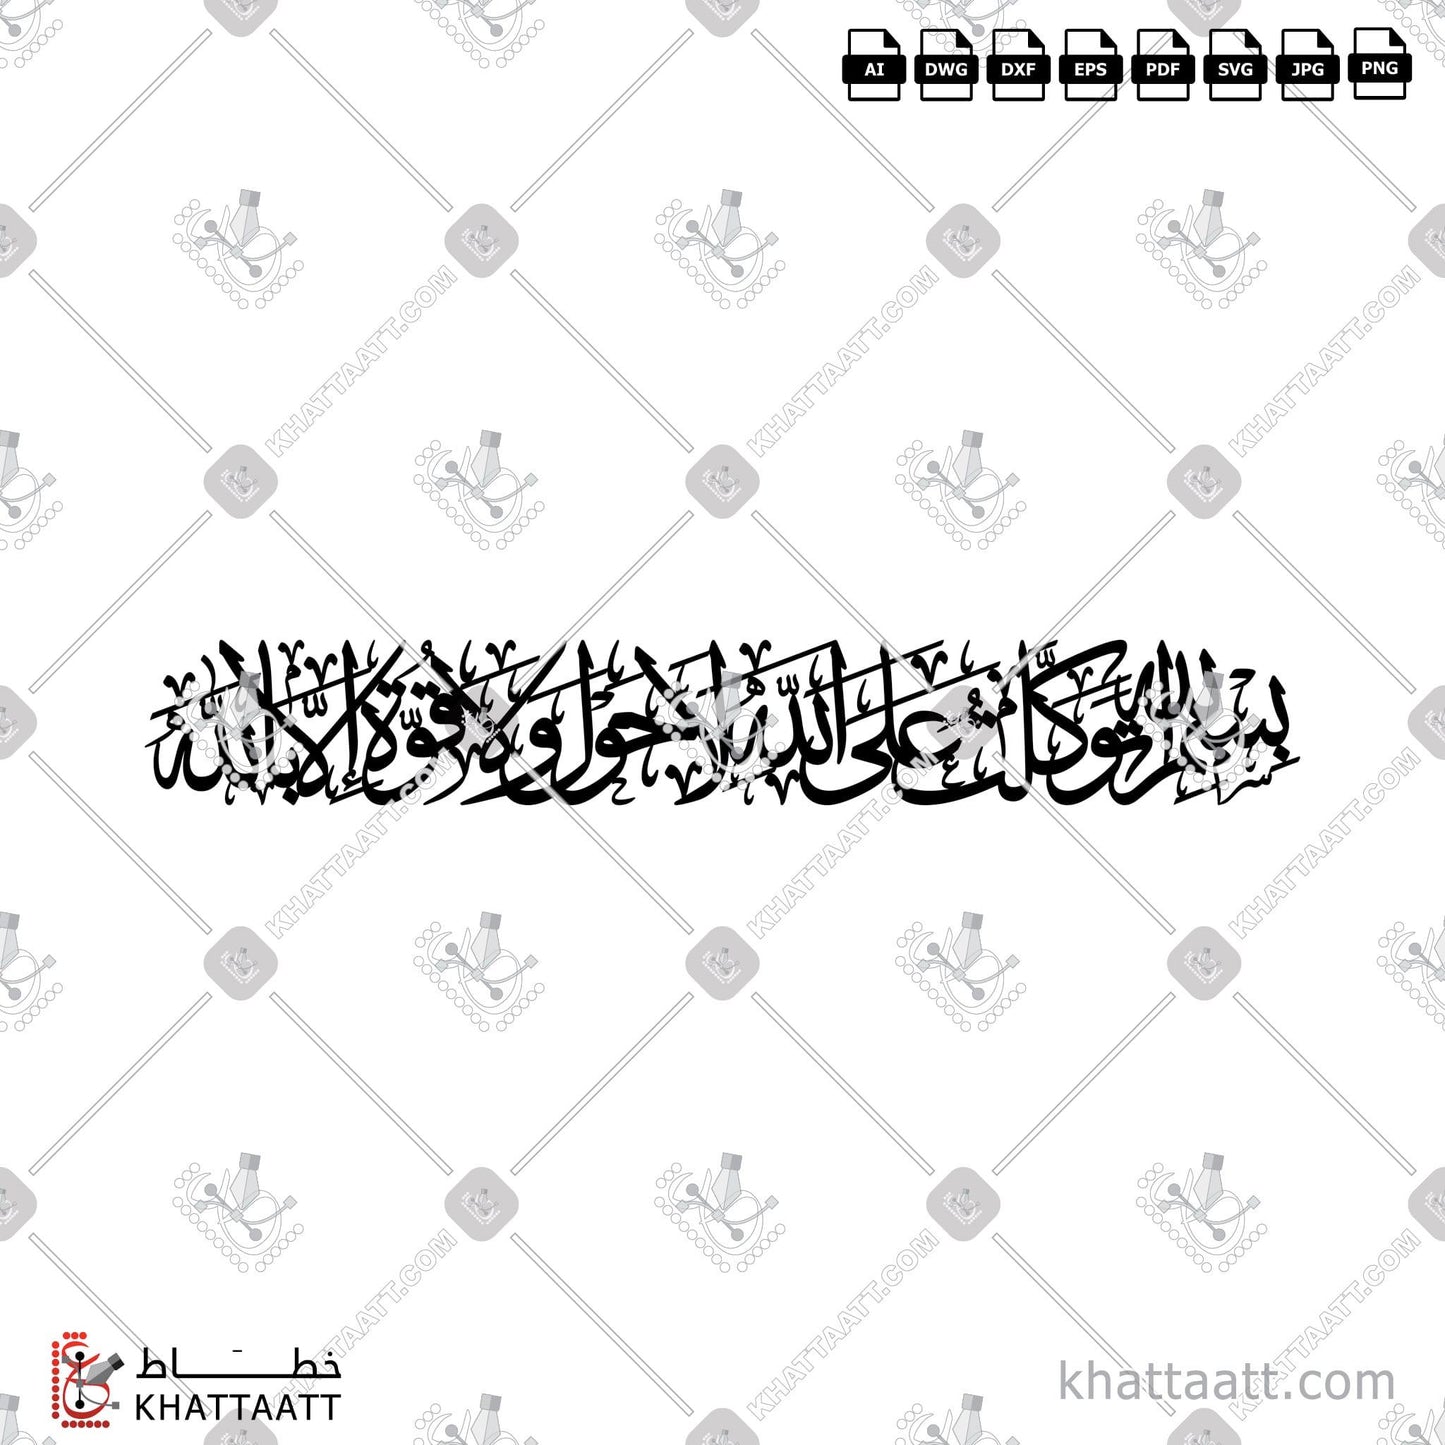 Download Arabic Calligraphy of بسم الله توكلت على الله لا حول ولا قوة إلا بالله in Thuluth - خط الثلث in vector and .png